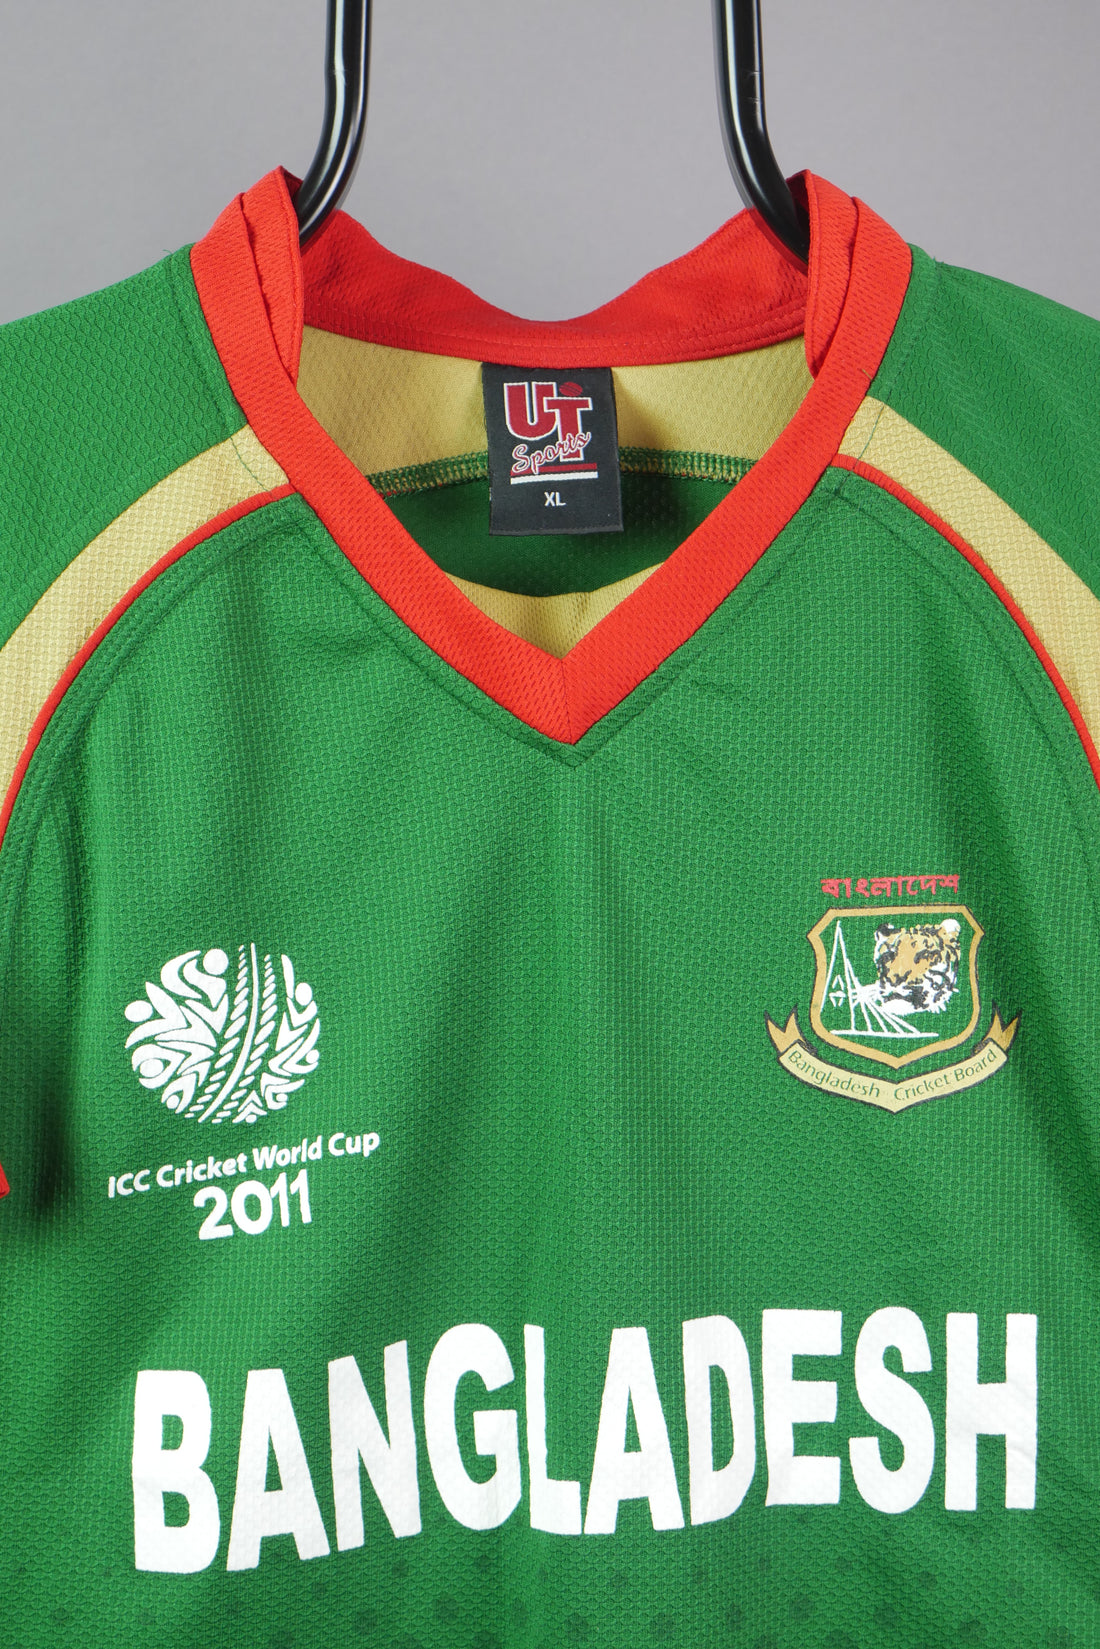 The Bangledesh Cricket T-Shirt (XL)